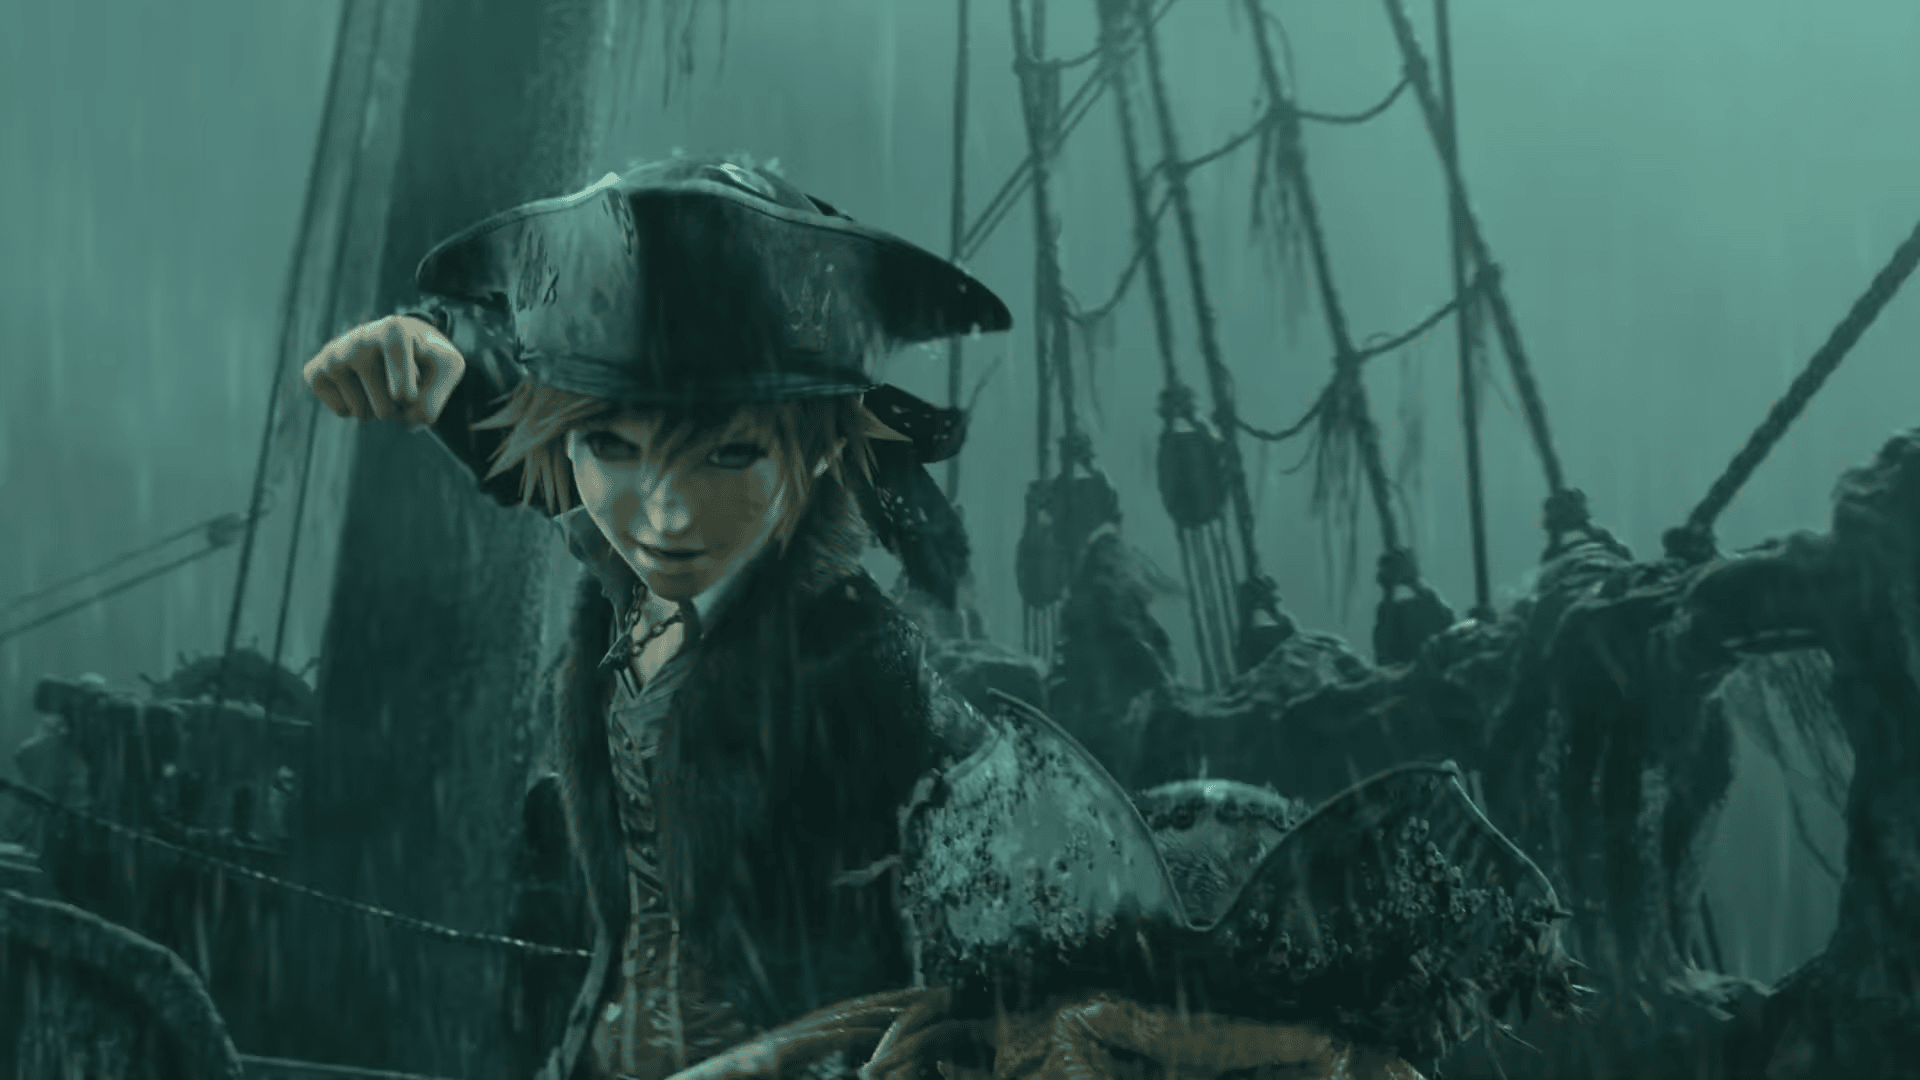 Kingdom Hearts III Composer Yoshitaka Suzuki Reveals Creative Process For Davy Jones’ Tracks